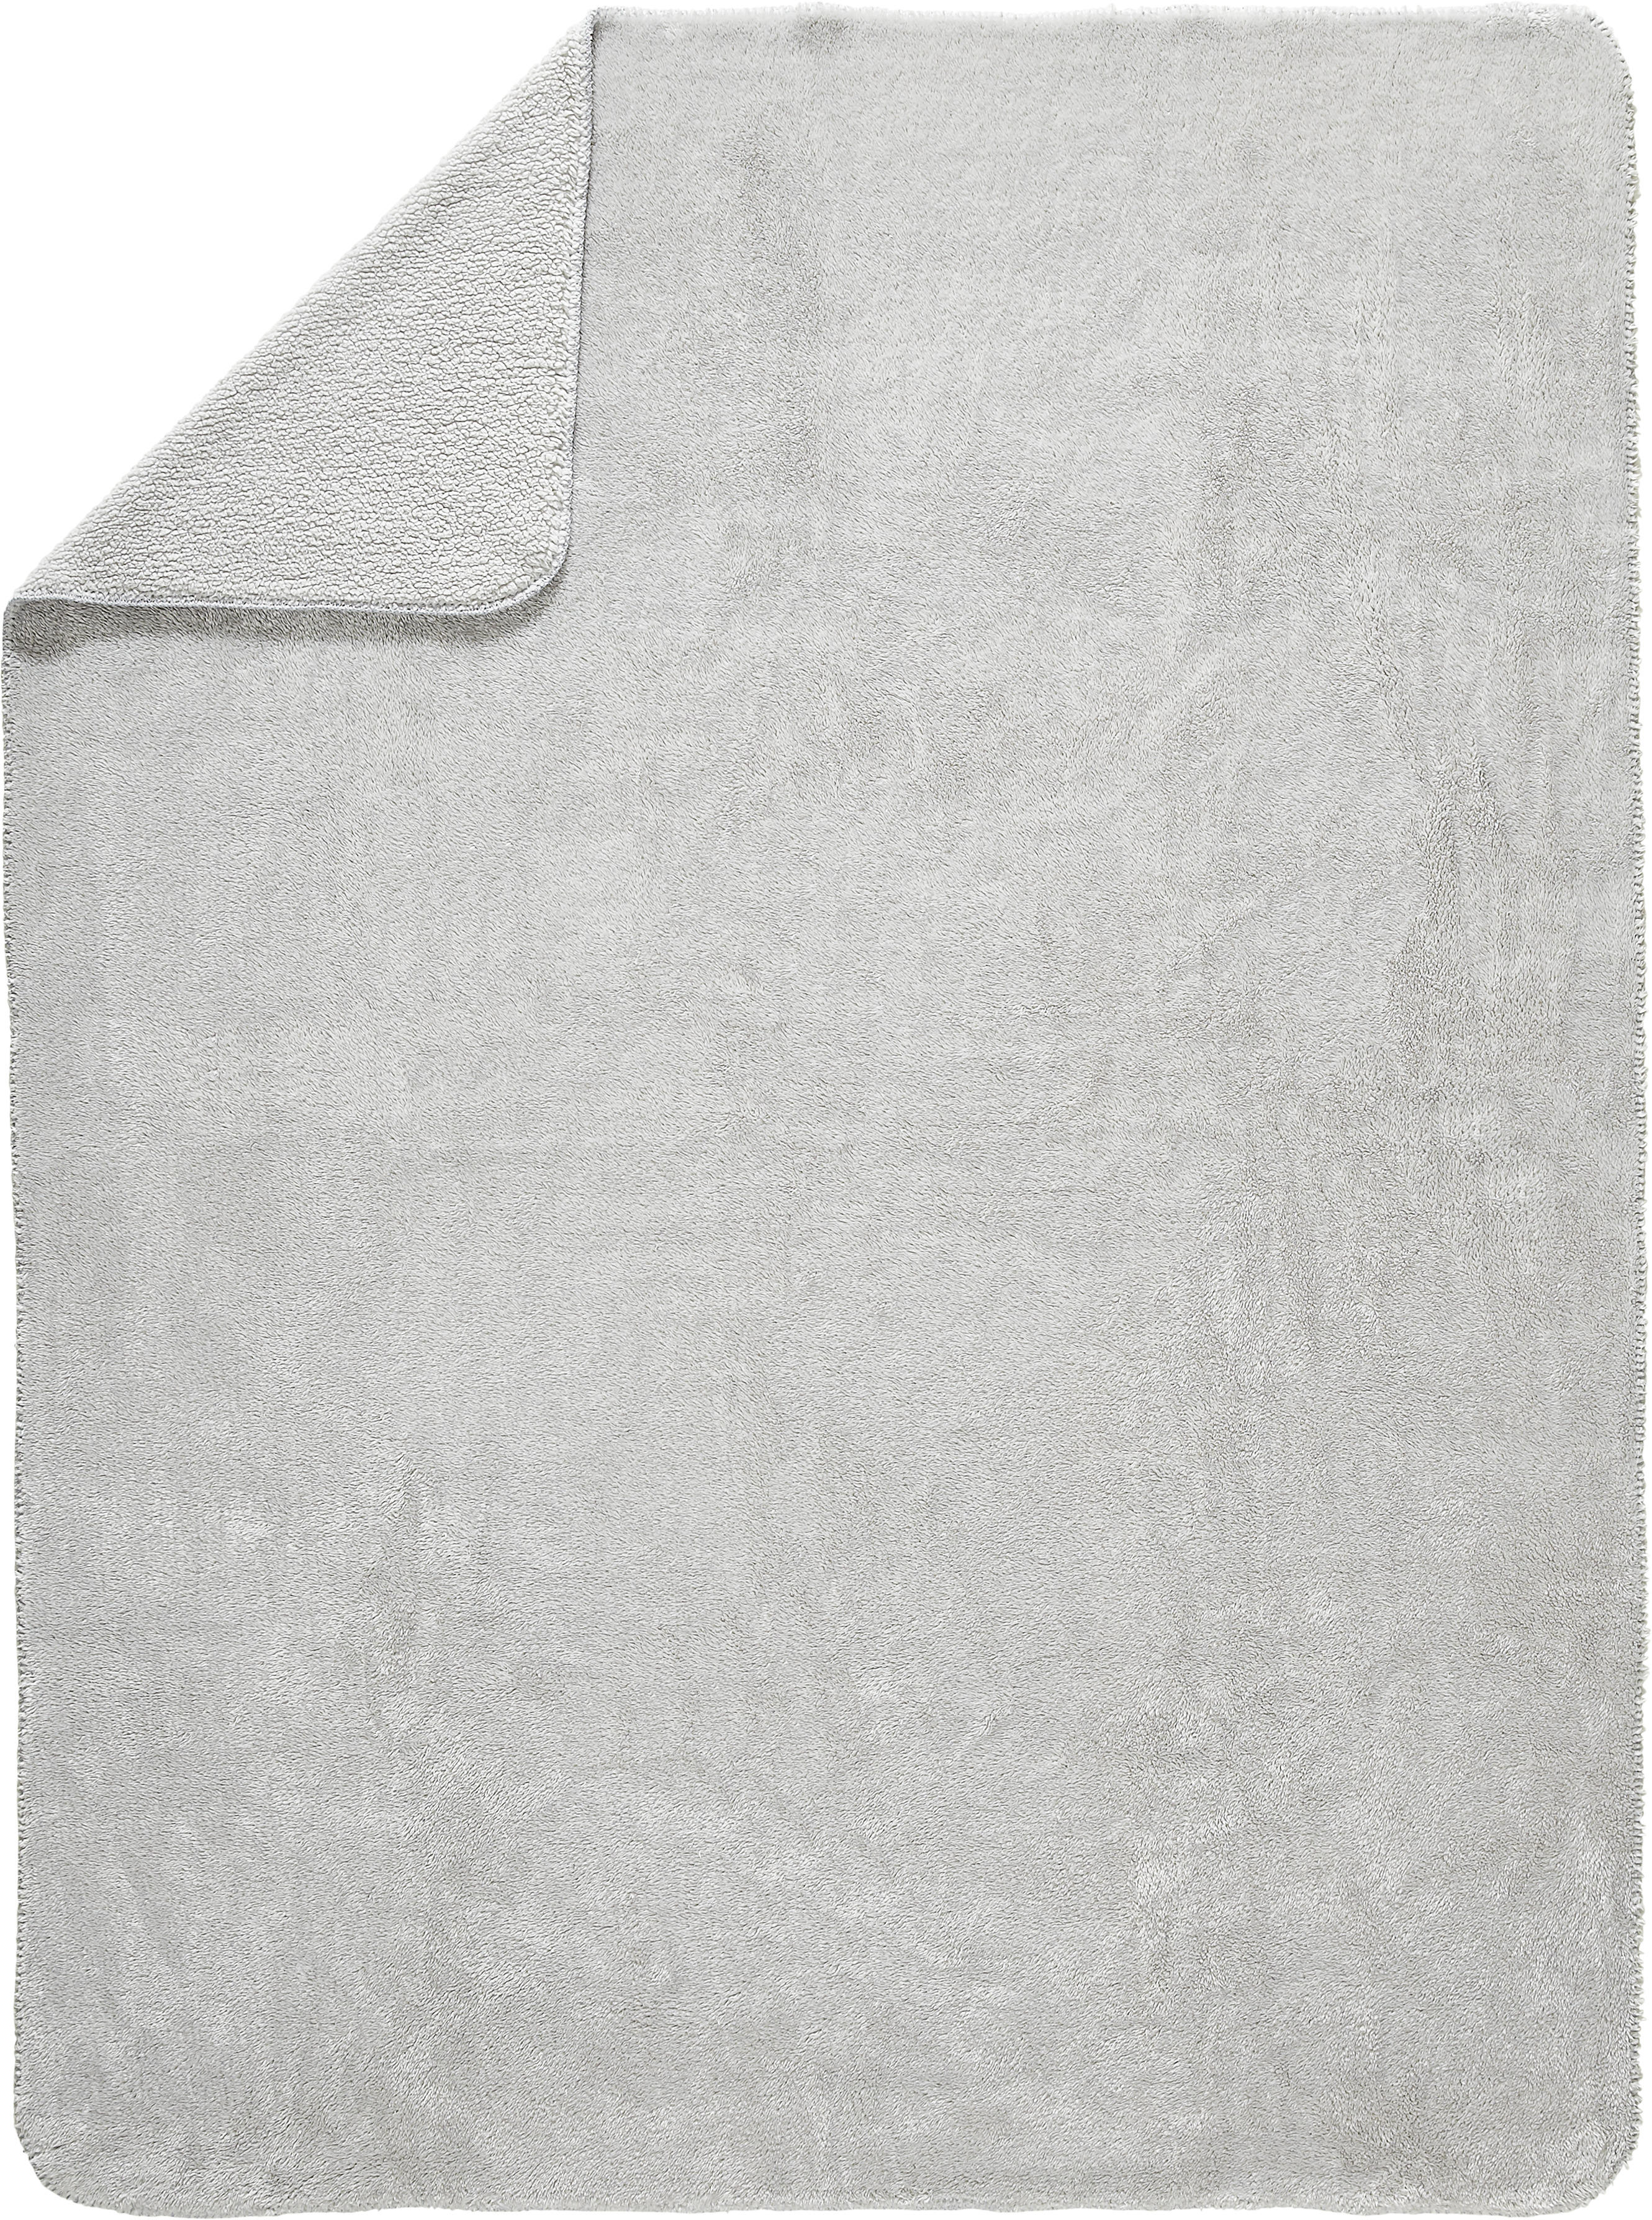 PLAID Teddy 150/200 cm  - Silberfarben, Basics, Textil (150/200cm) - Novel